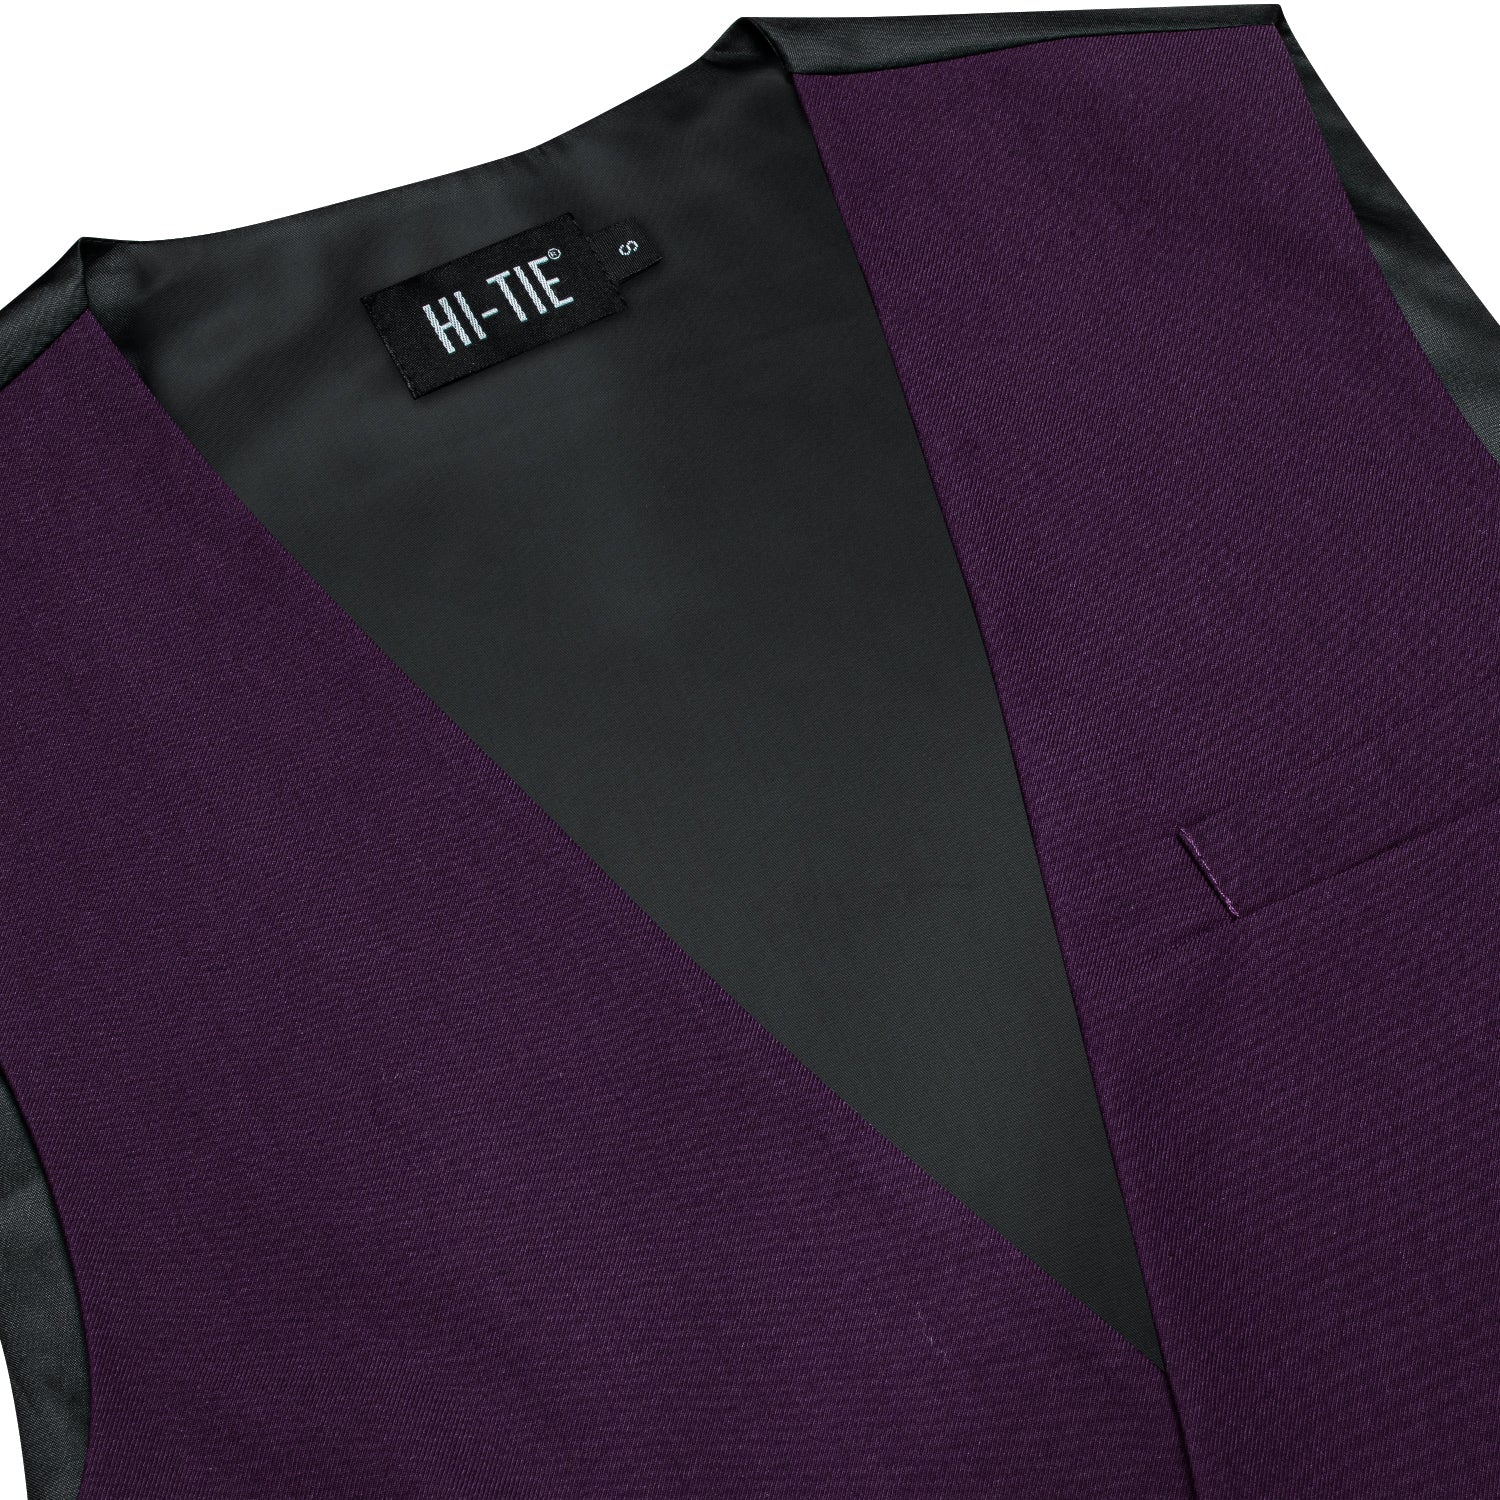 Deep Purple Solid Silk Style Men's Single Vest